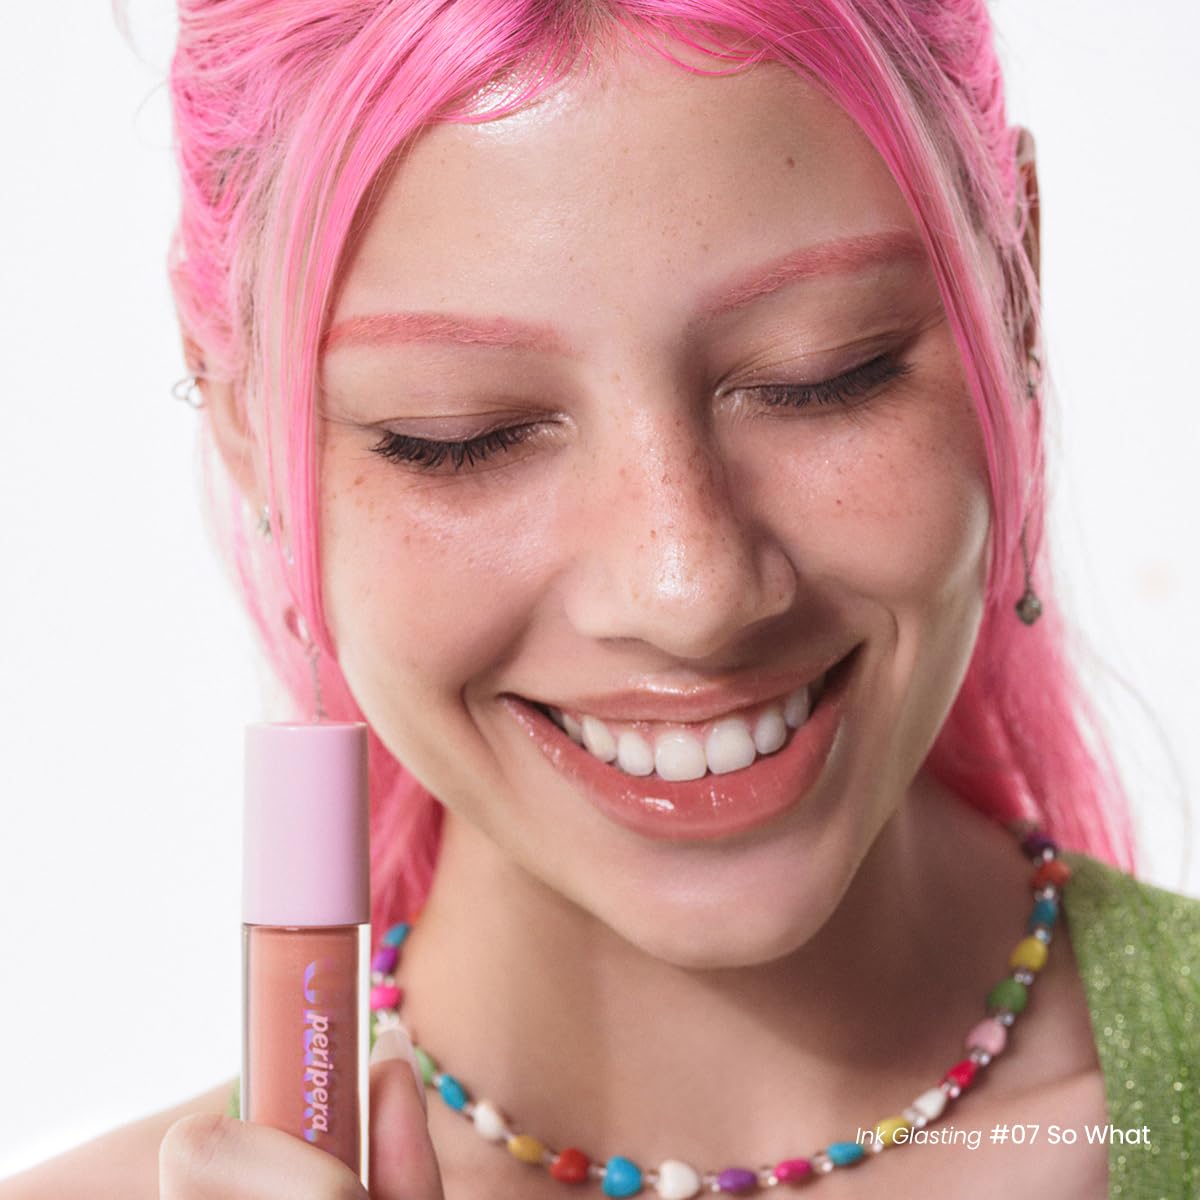 Peripera Ink Glasting Lip Gloss #07 So What